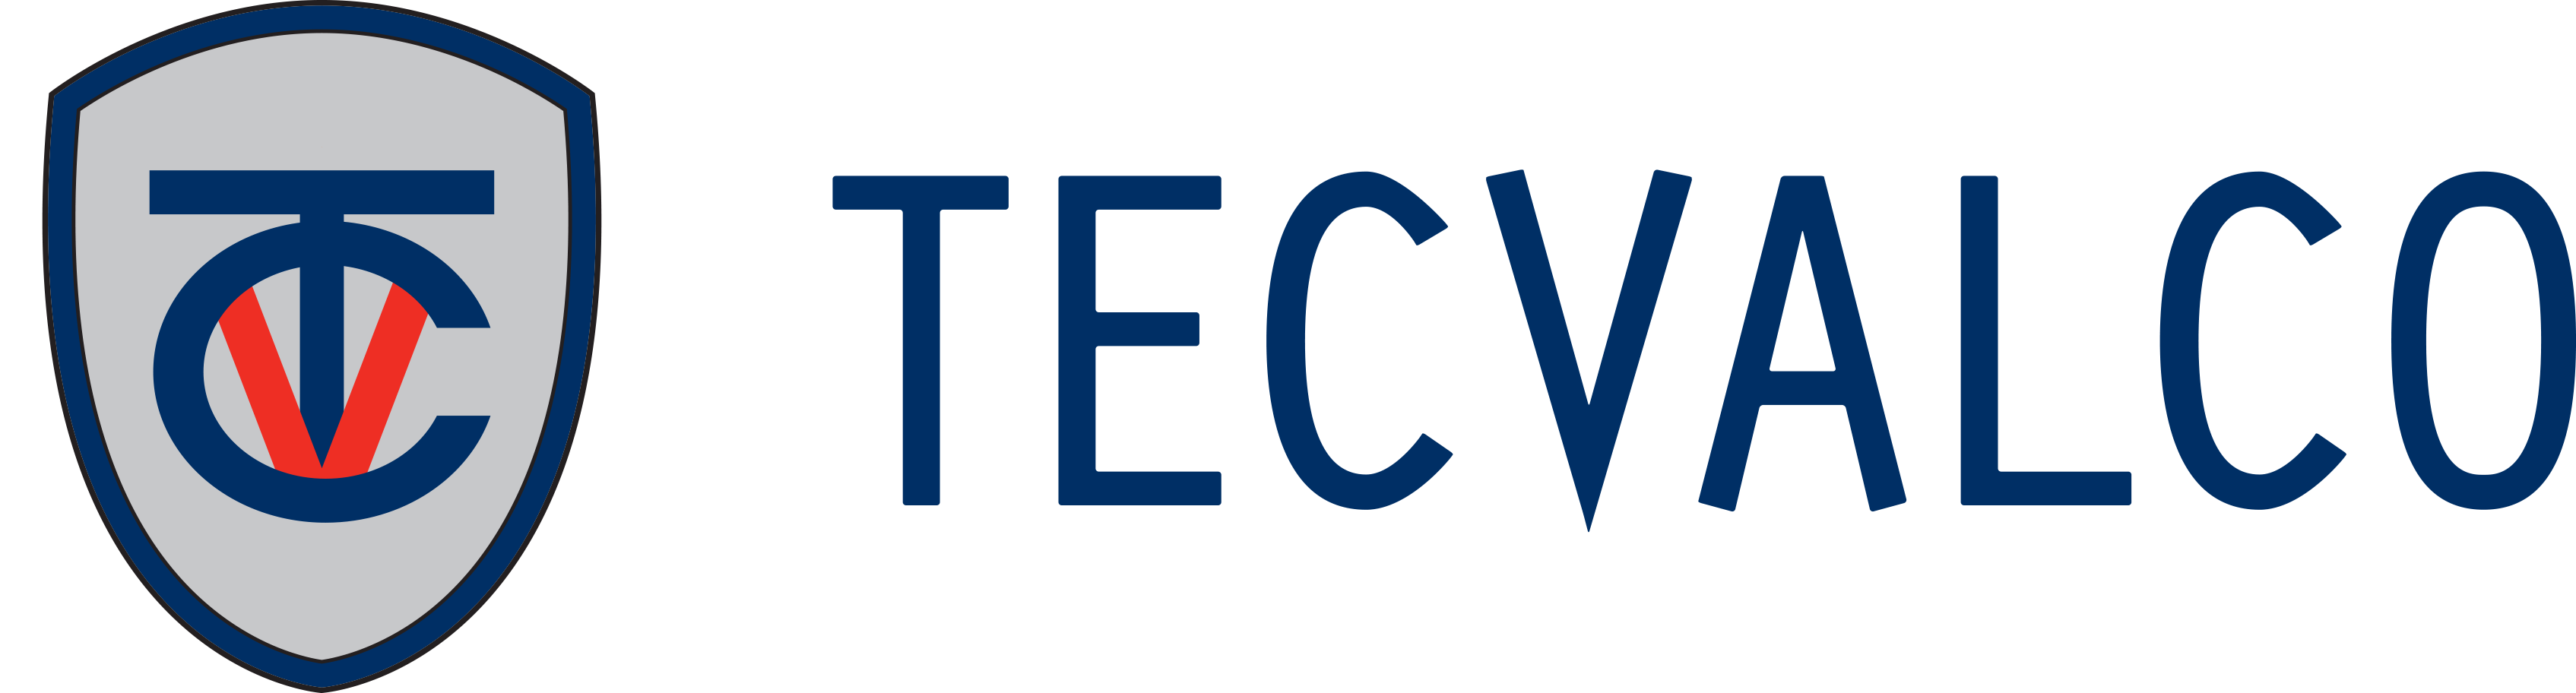 2101-tecvalco-logo-2017-horizontal-spot-colour-16442595601111.png